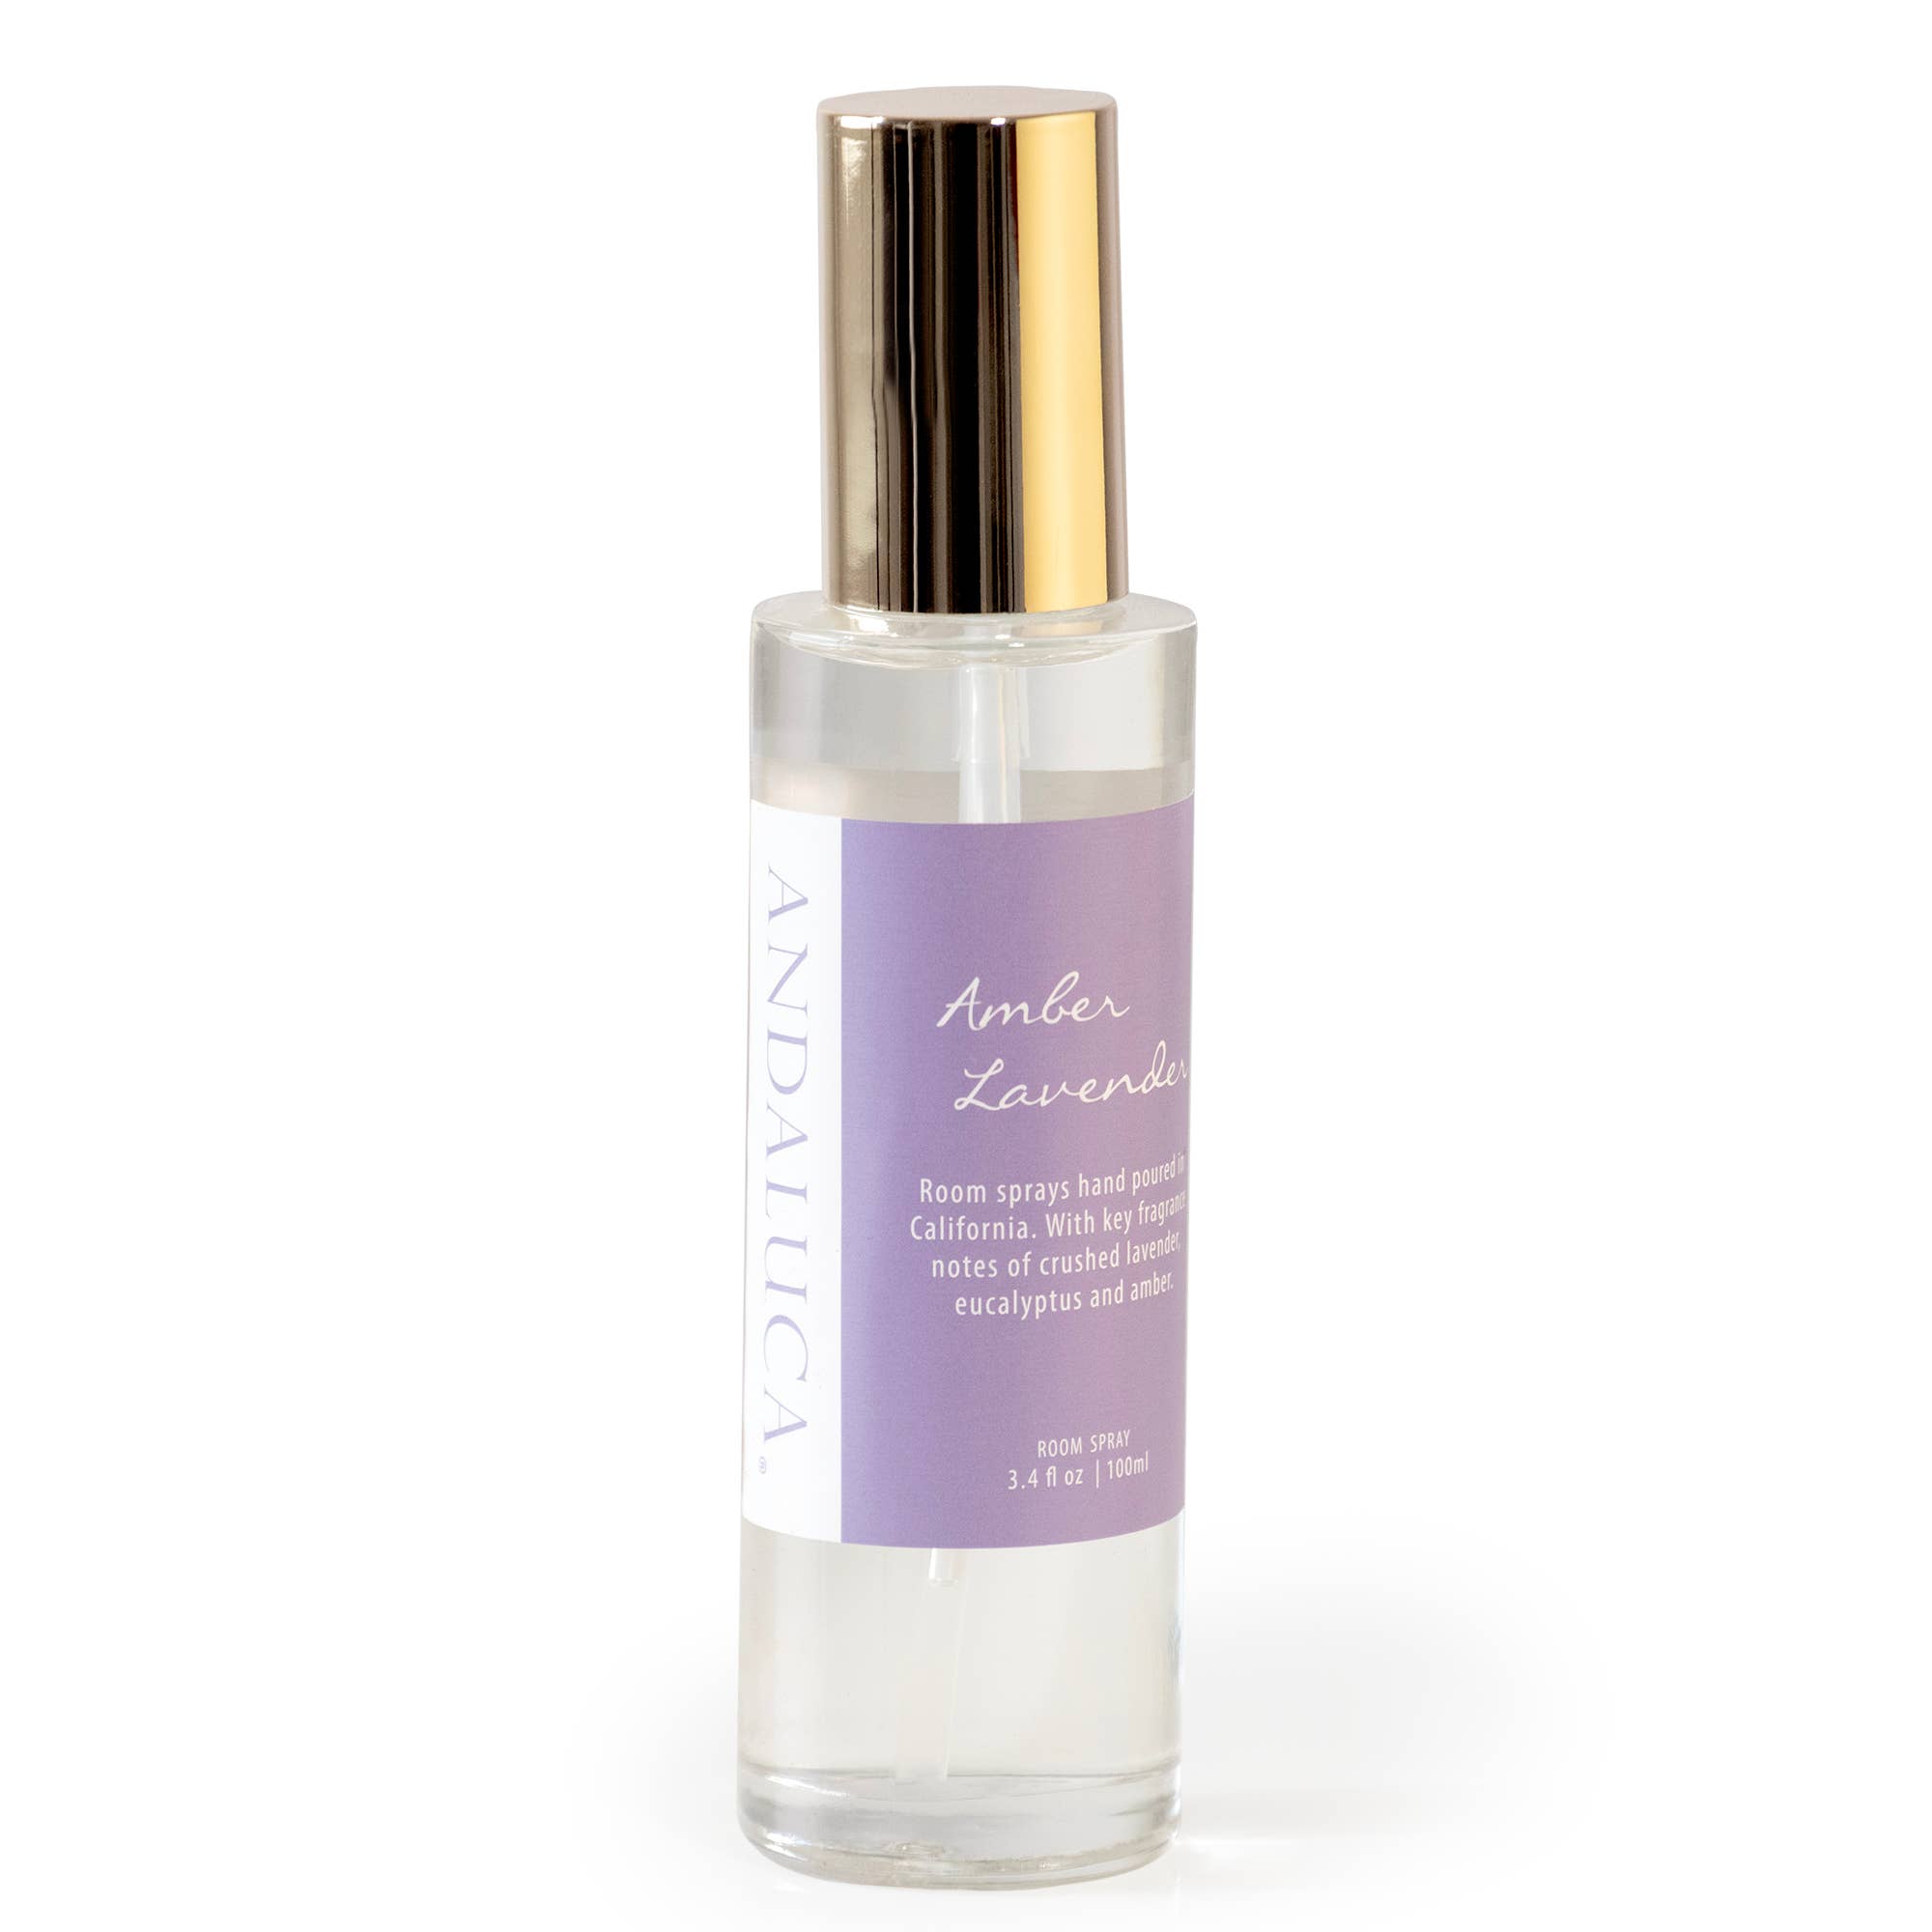 Amber Lavender Room Spray